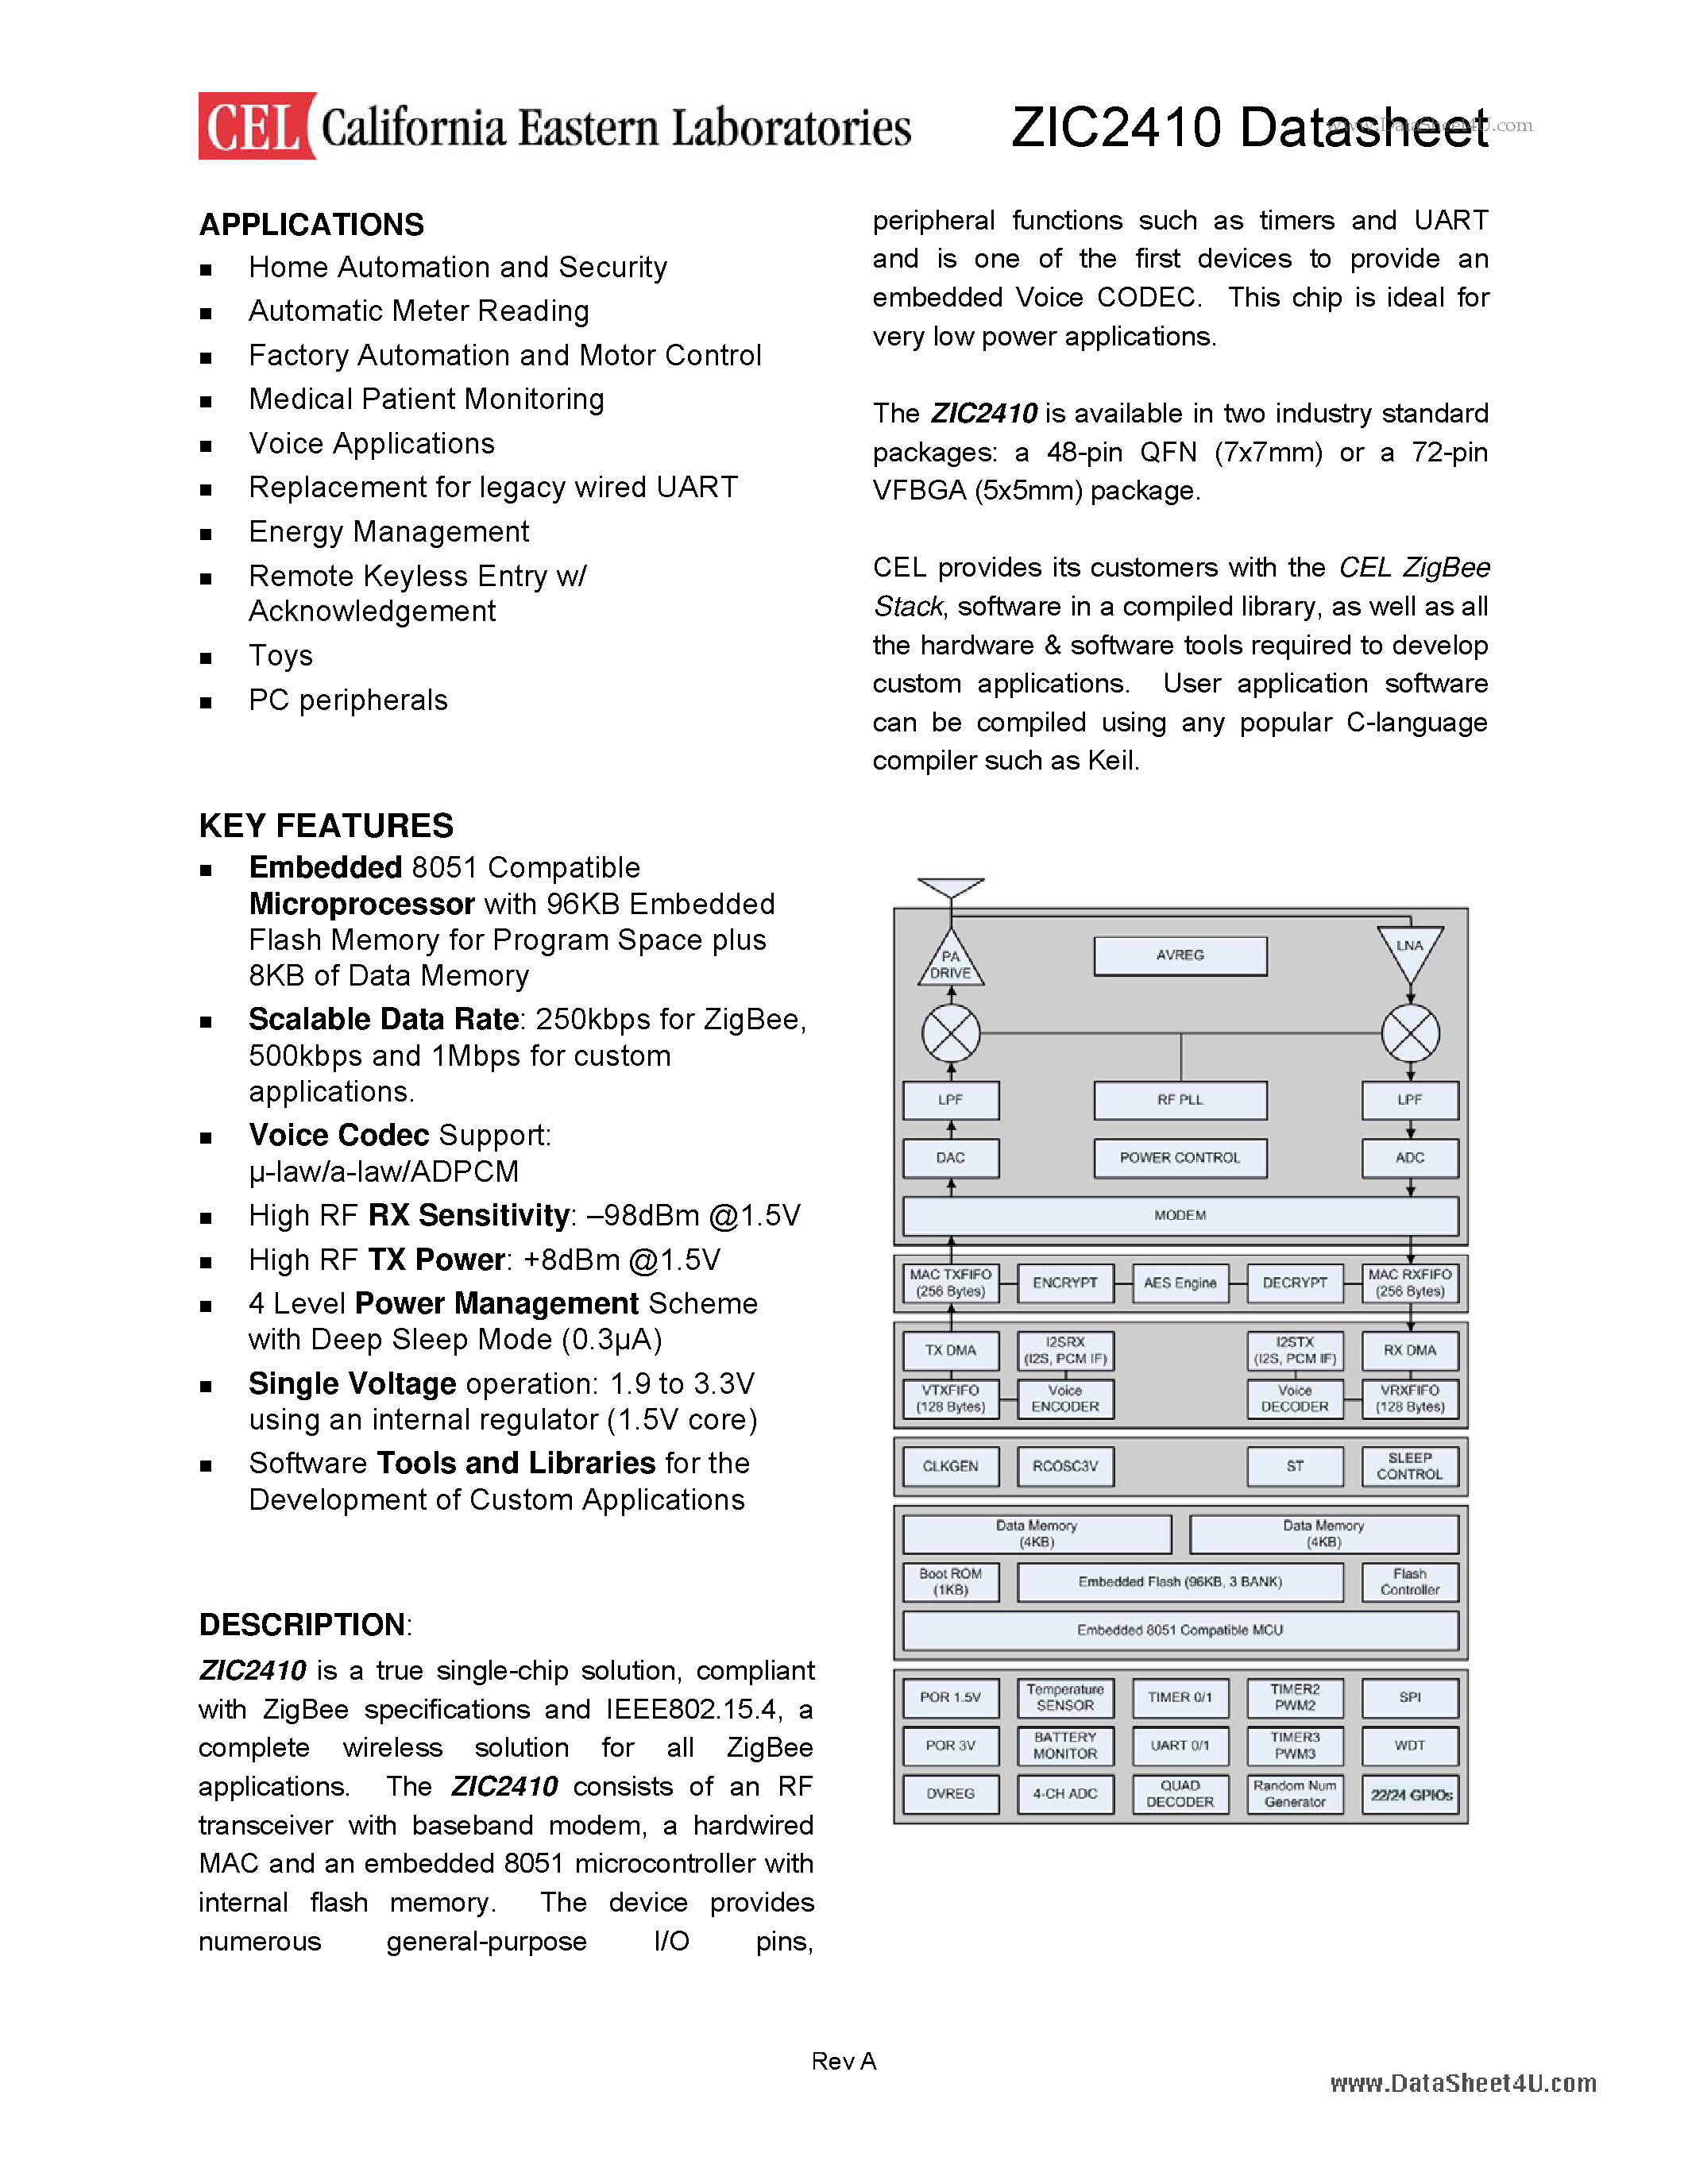 Даташит ZIC2410 - Single-chip 2.4GHz RF Transceiver страница 1